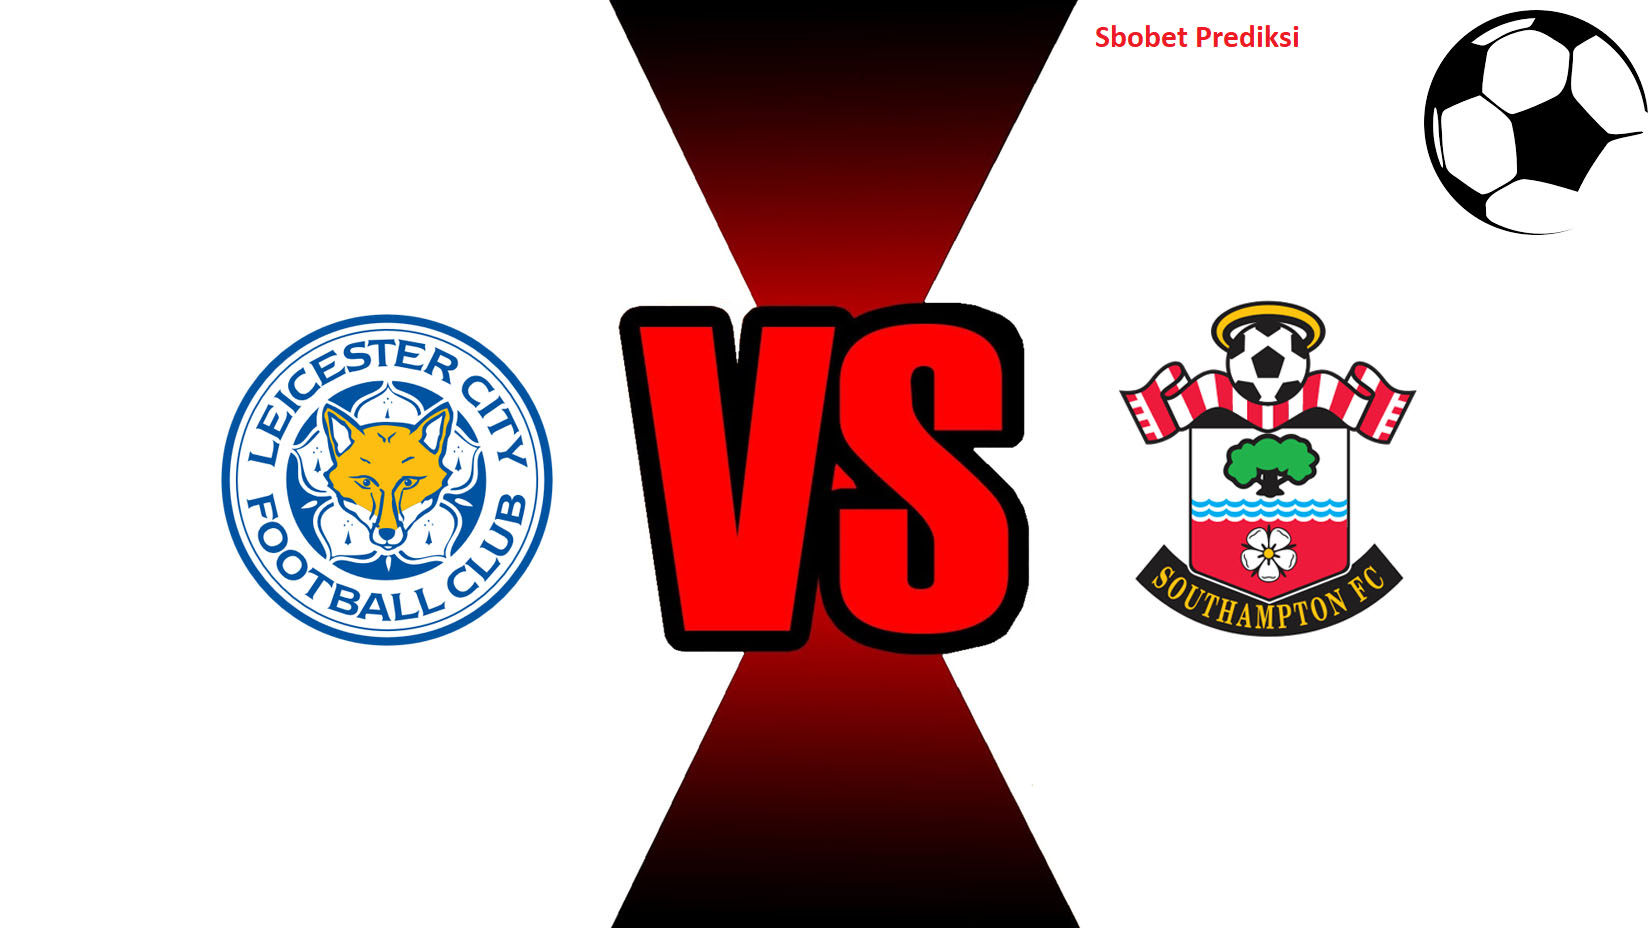 Prediksi Skor Bola Online Leicester City vs Southampton 31 Oktober 2018